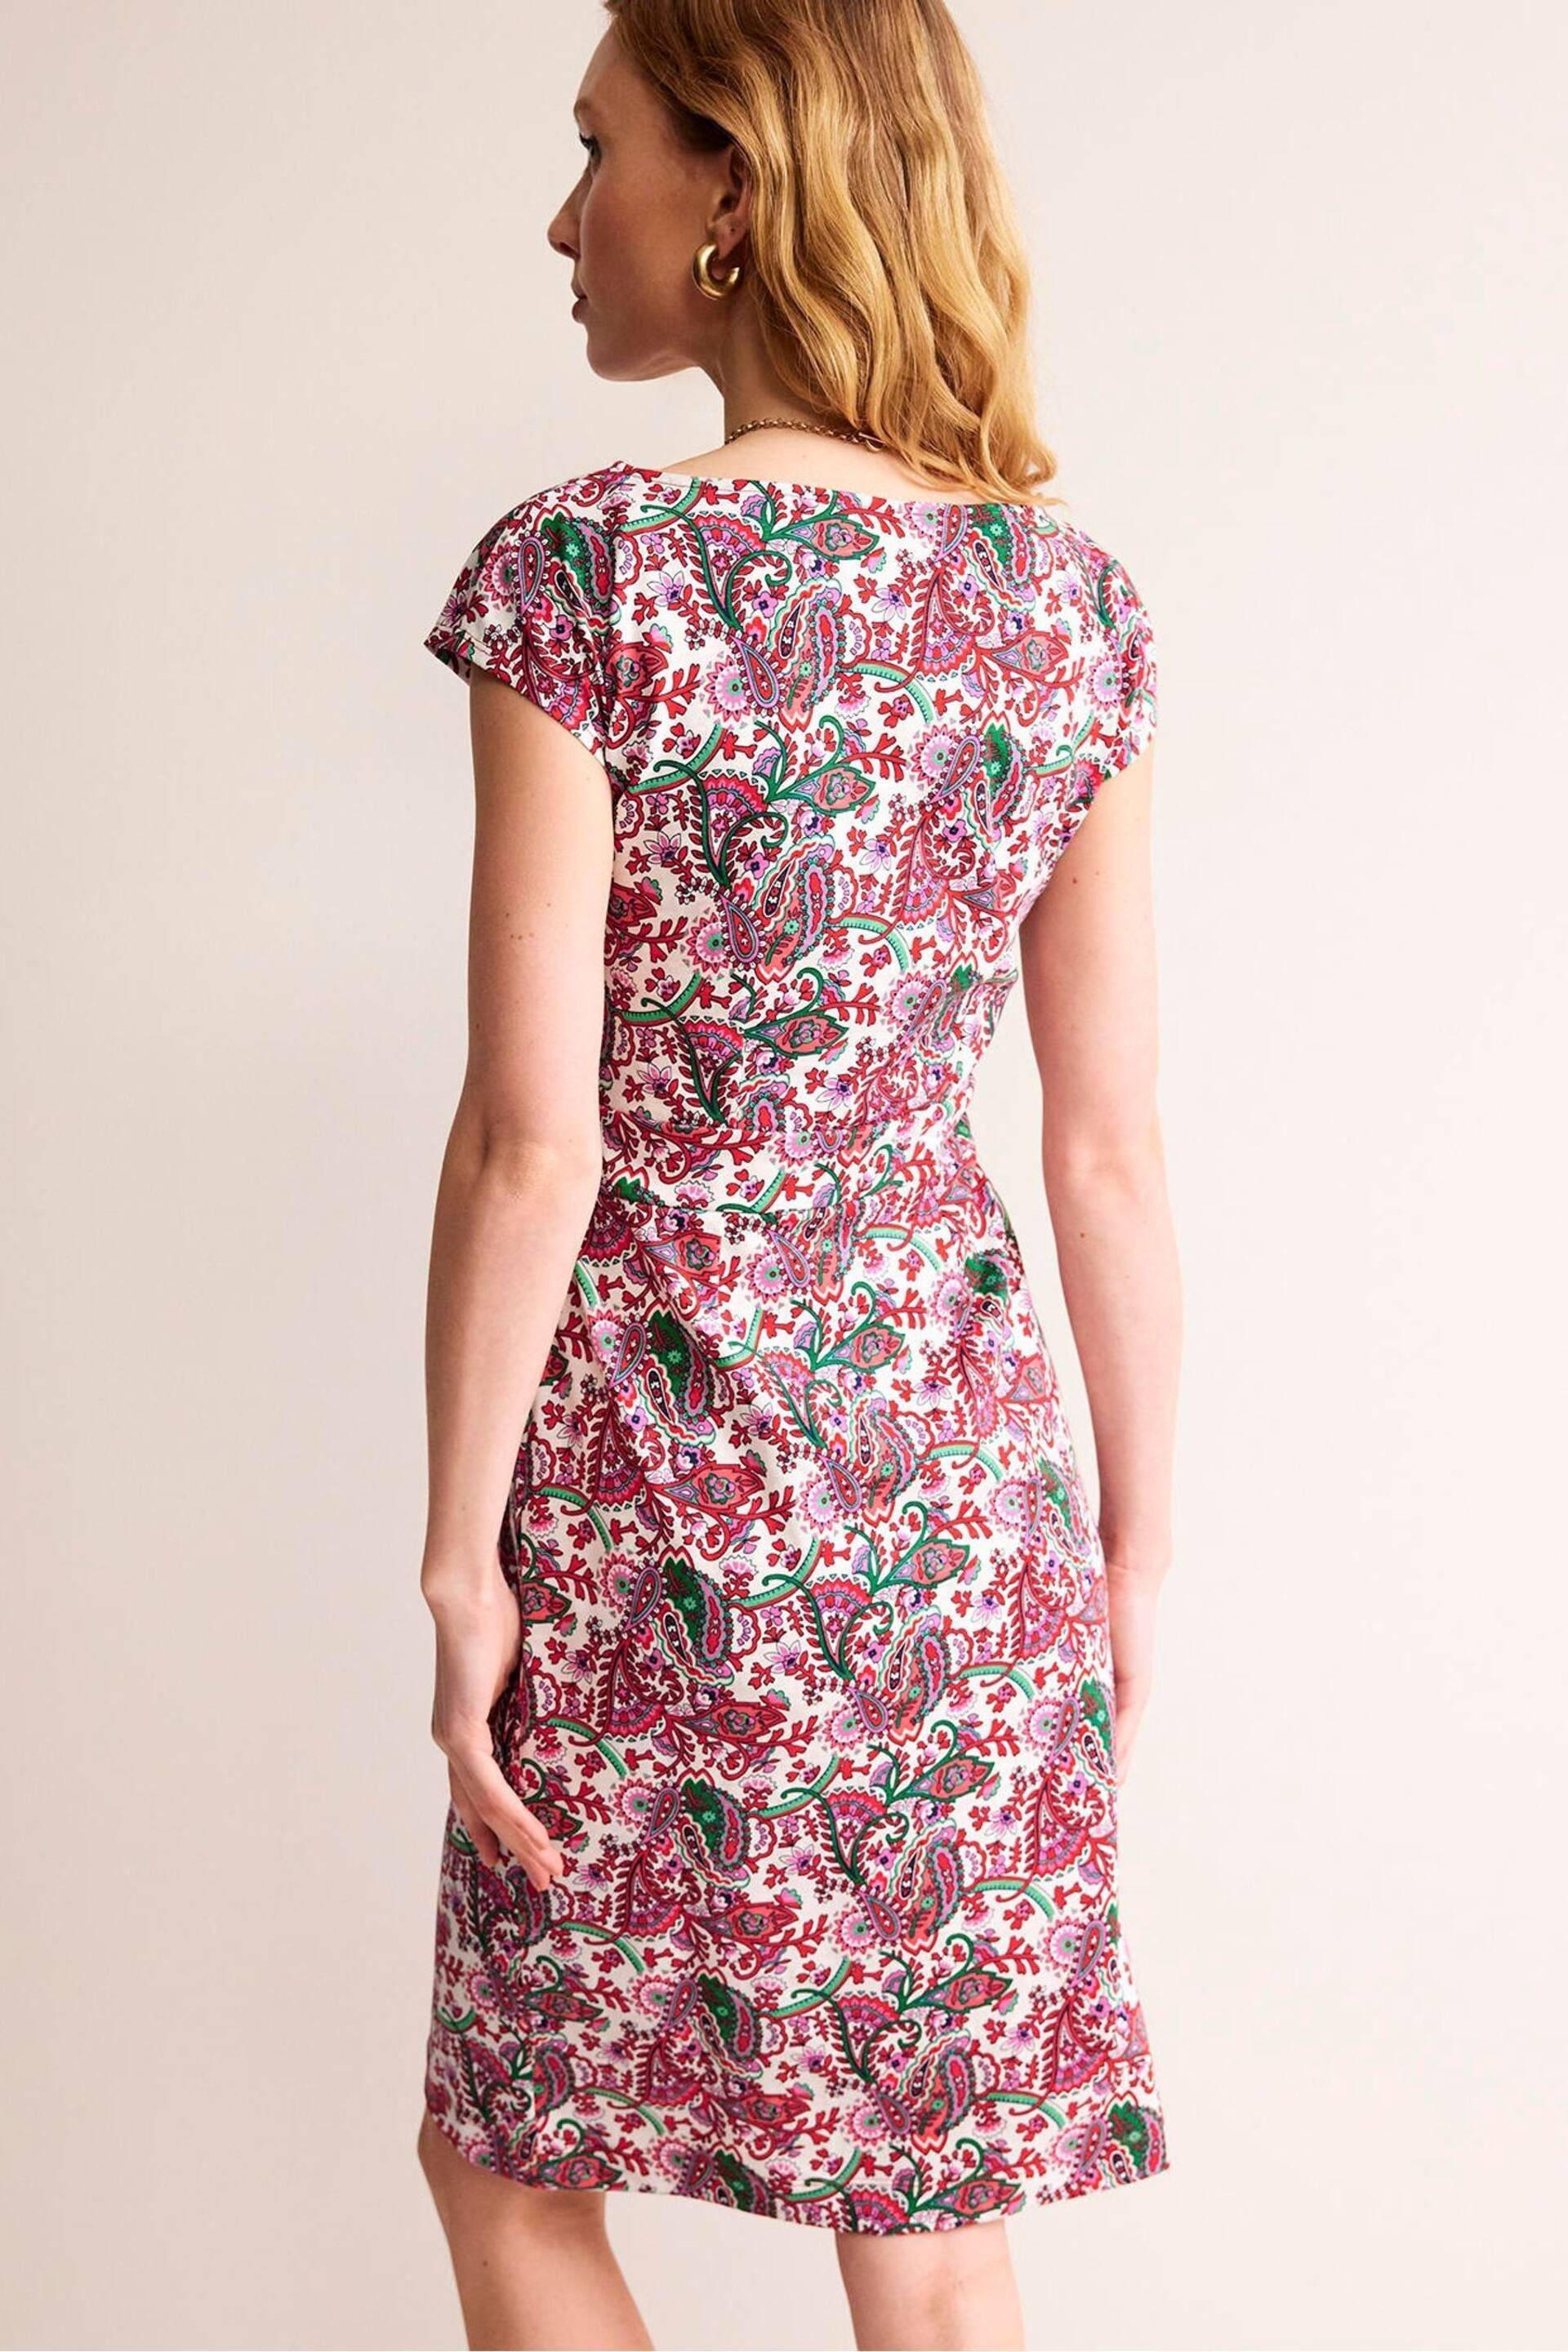 Boden Pink Florrie Jersey Dress - Image 3 of 4